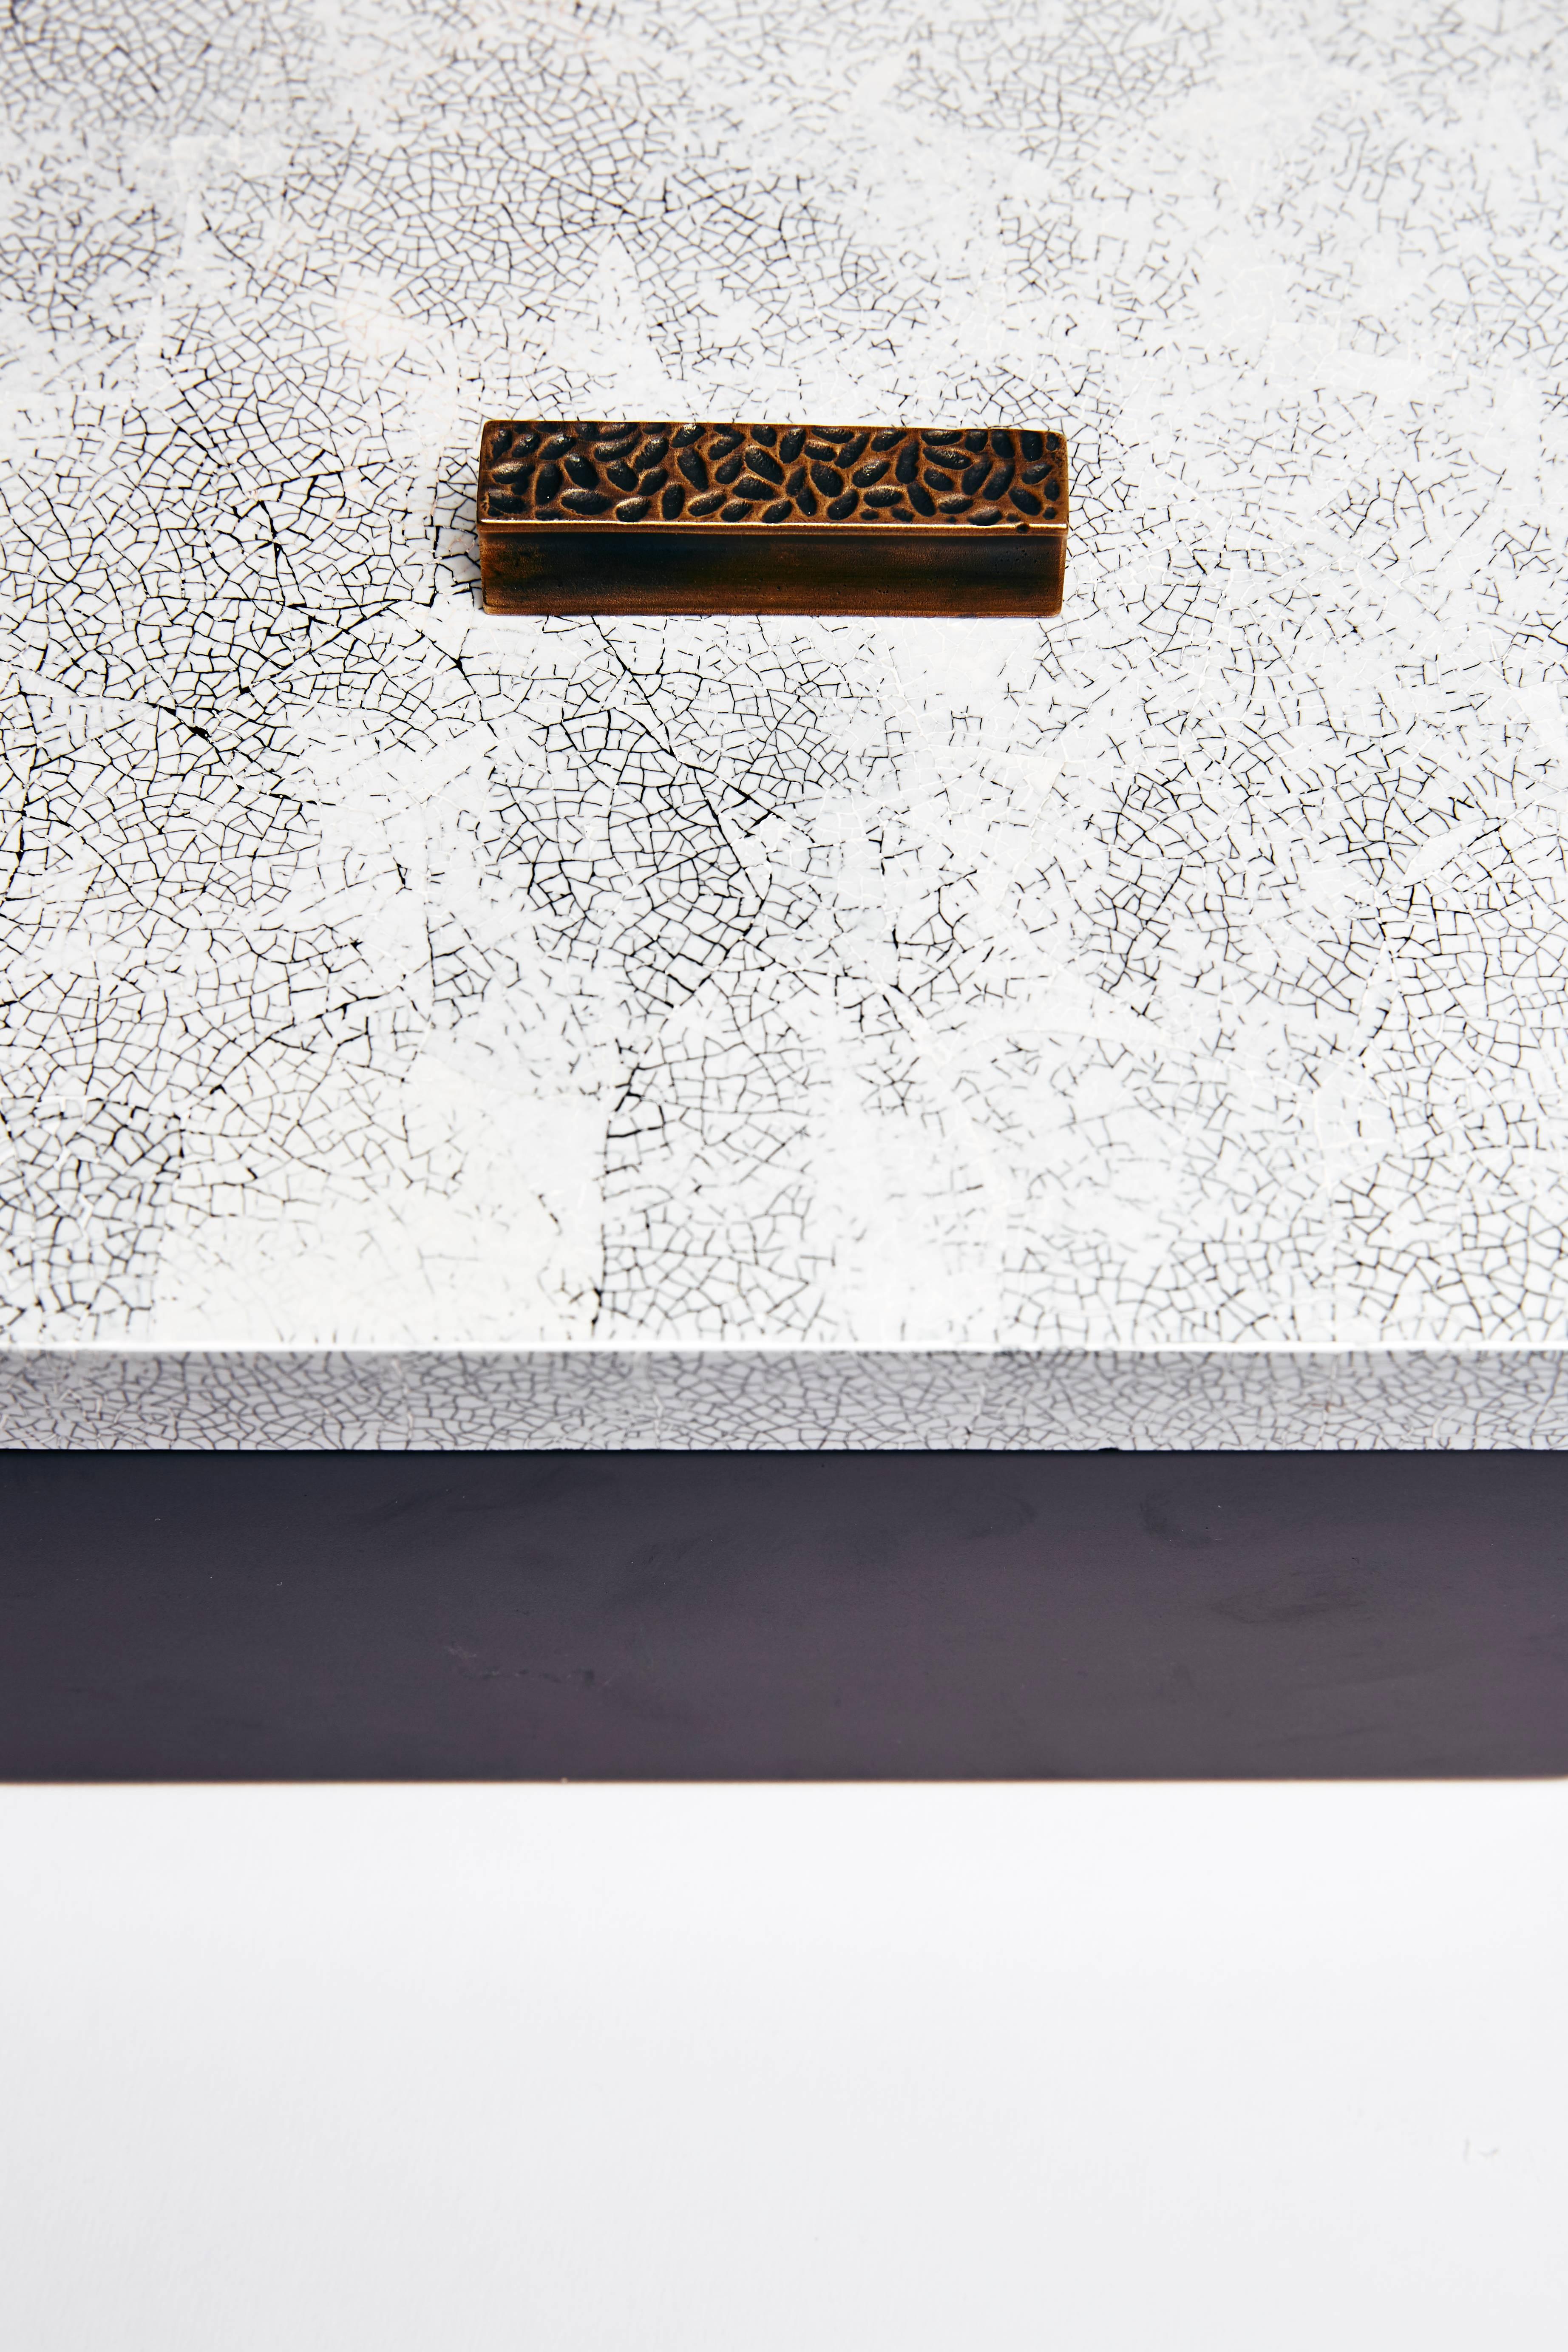 Decorative Boxes, ELLA by Reda Amalou Design, 2016 - White Eggshell, Black In New Condition For Sale In Paris, FR